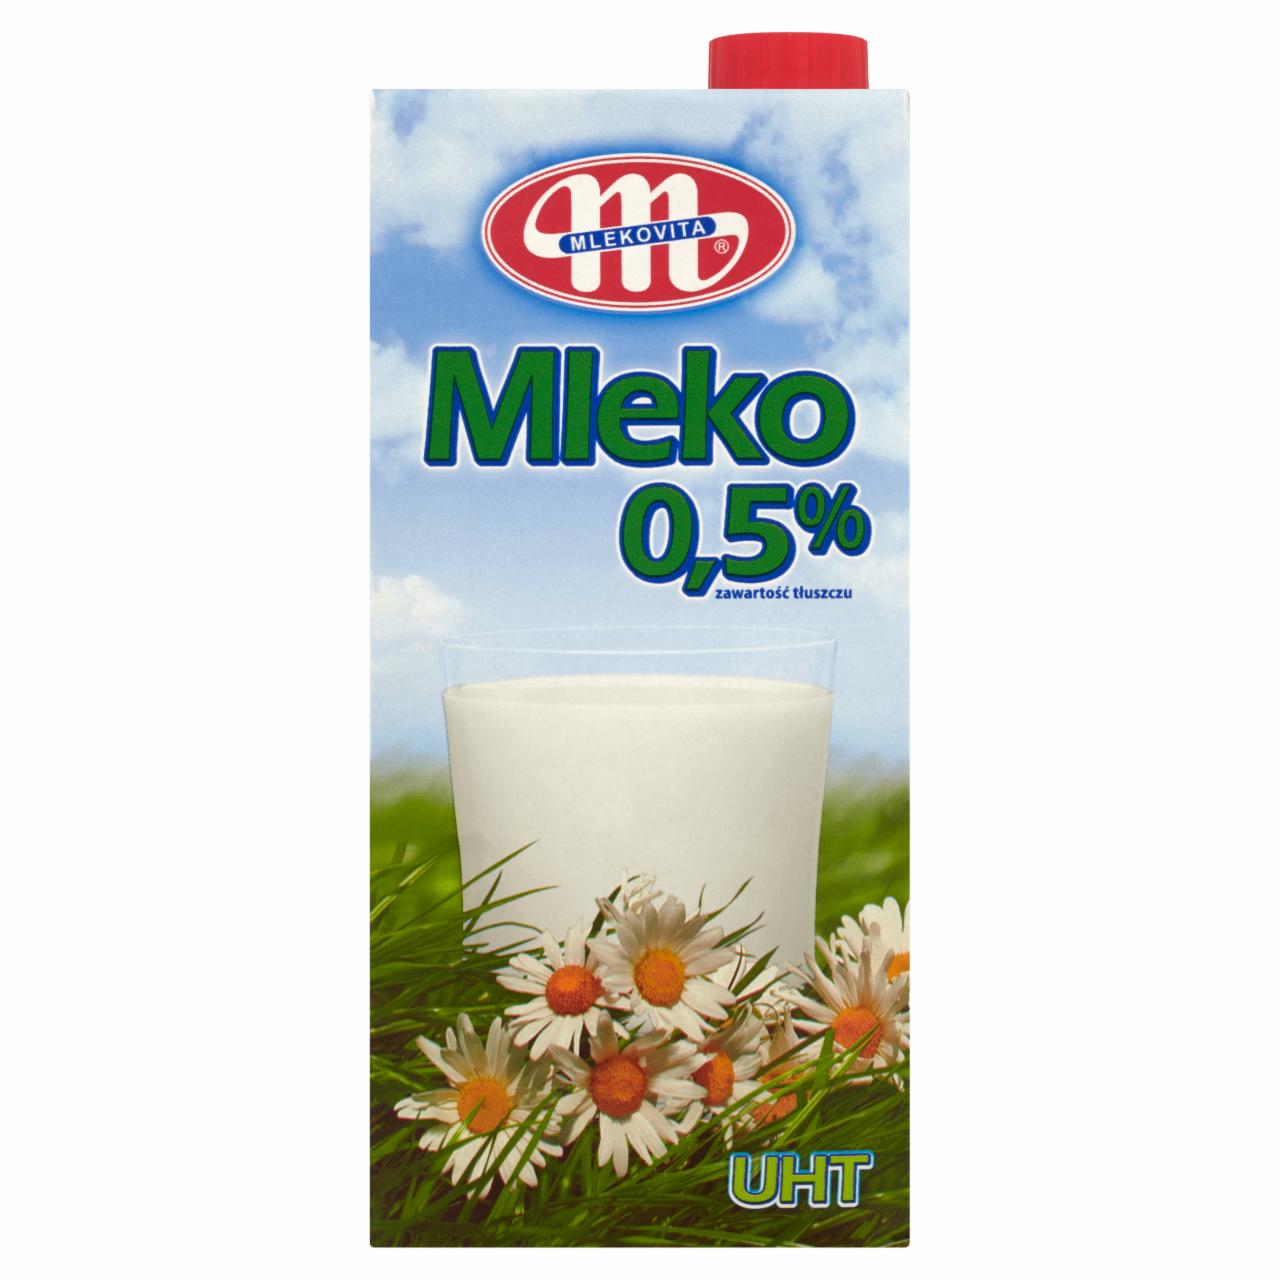 Zdjęcia - Mleko 0,5 % Mlekovita